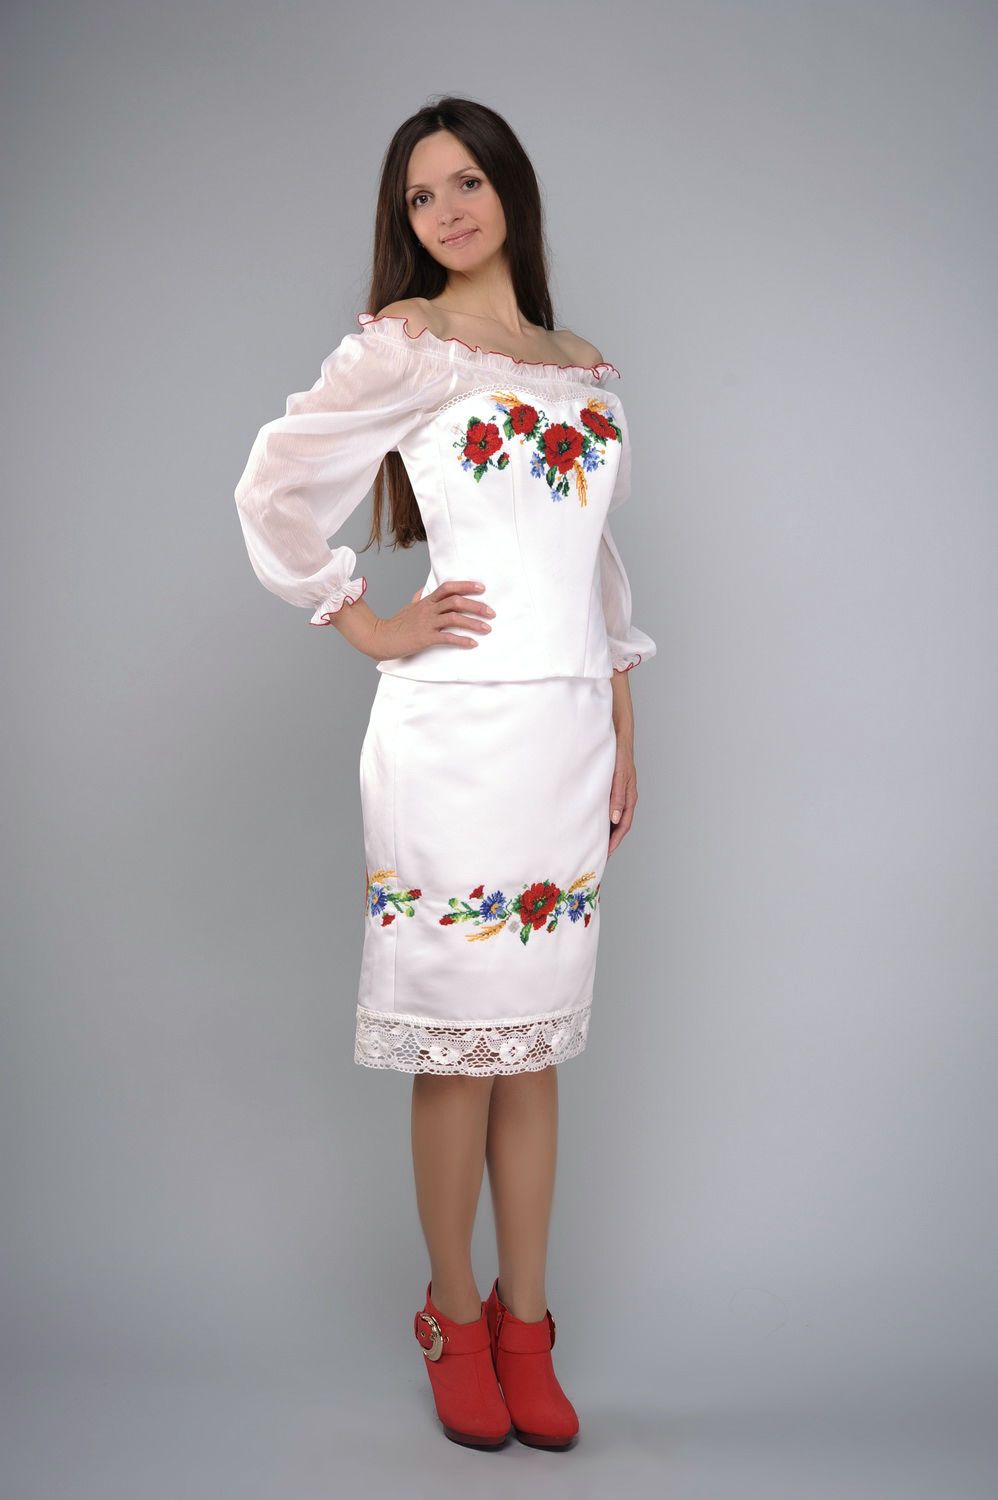 Costume blanc femme style ethnique photo 2